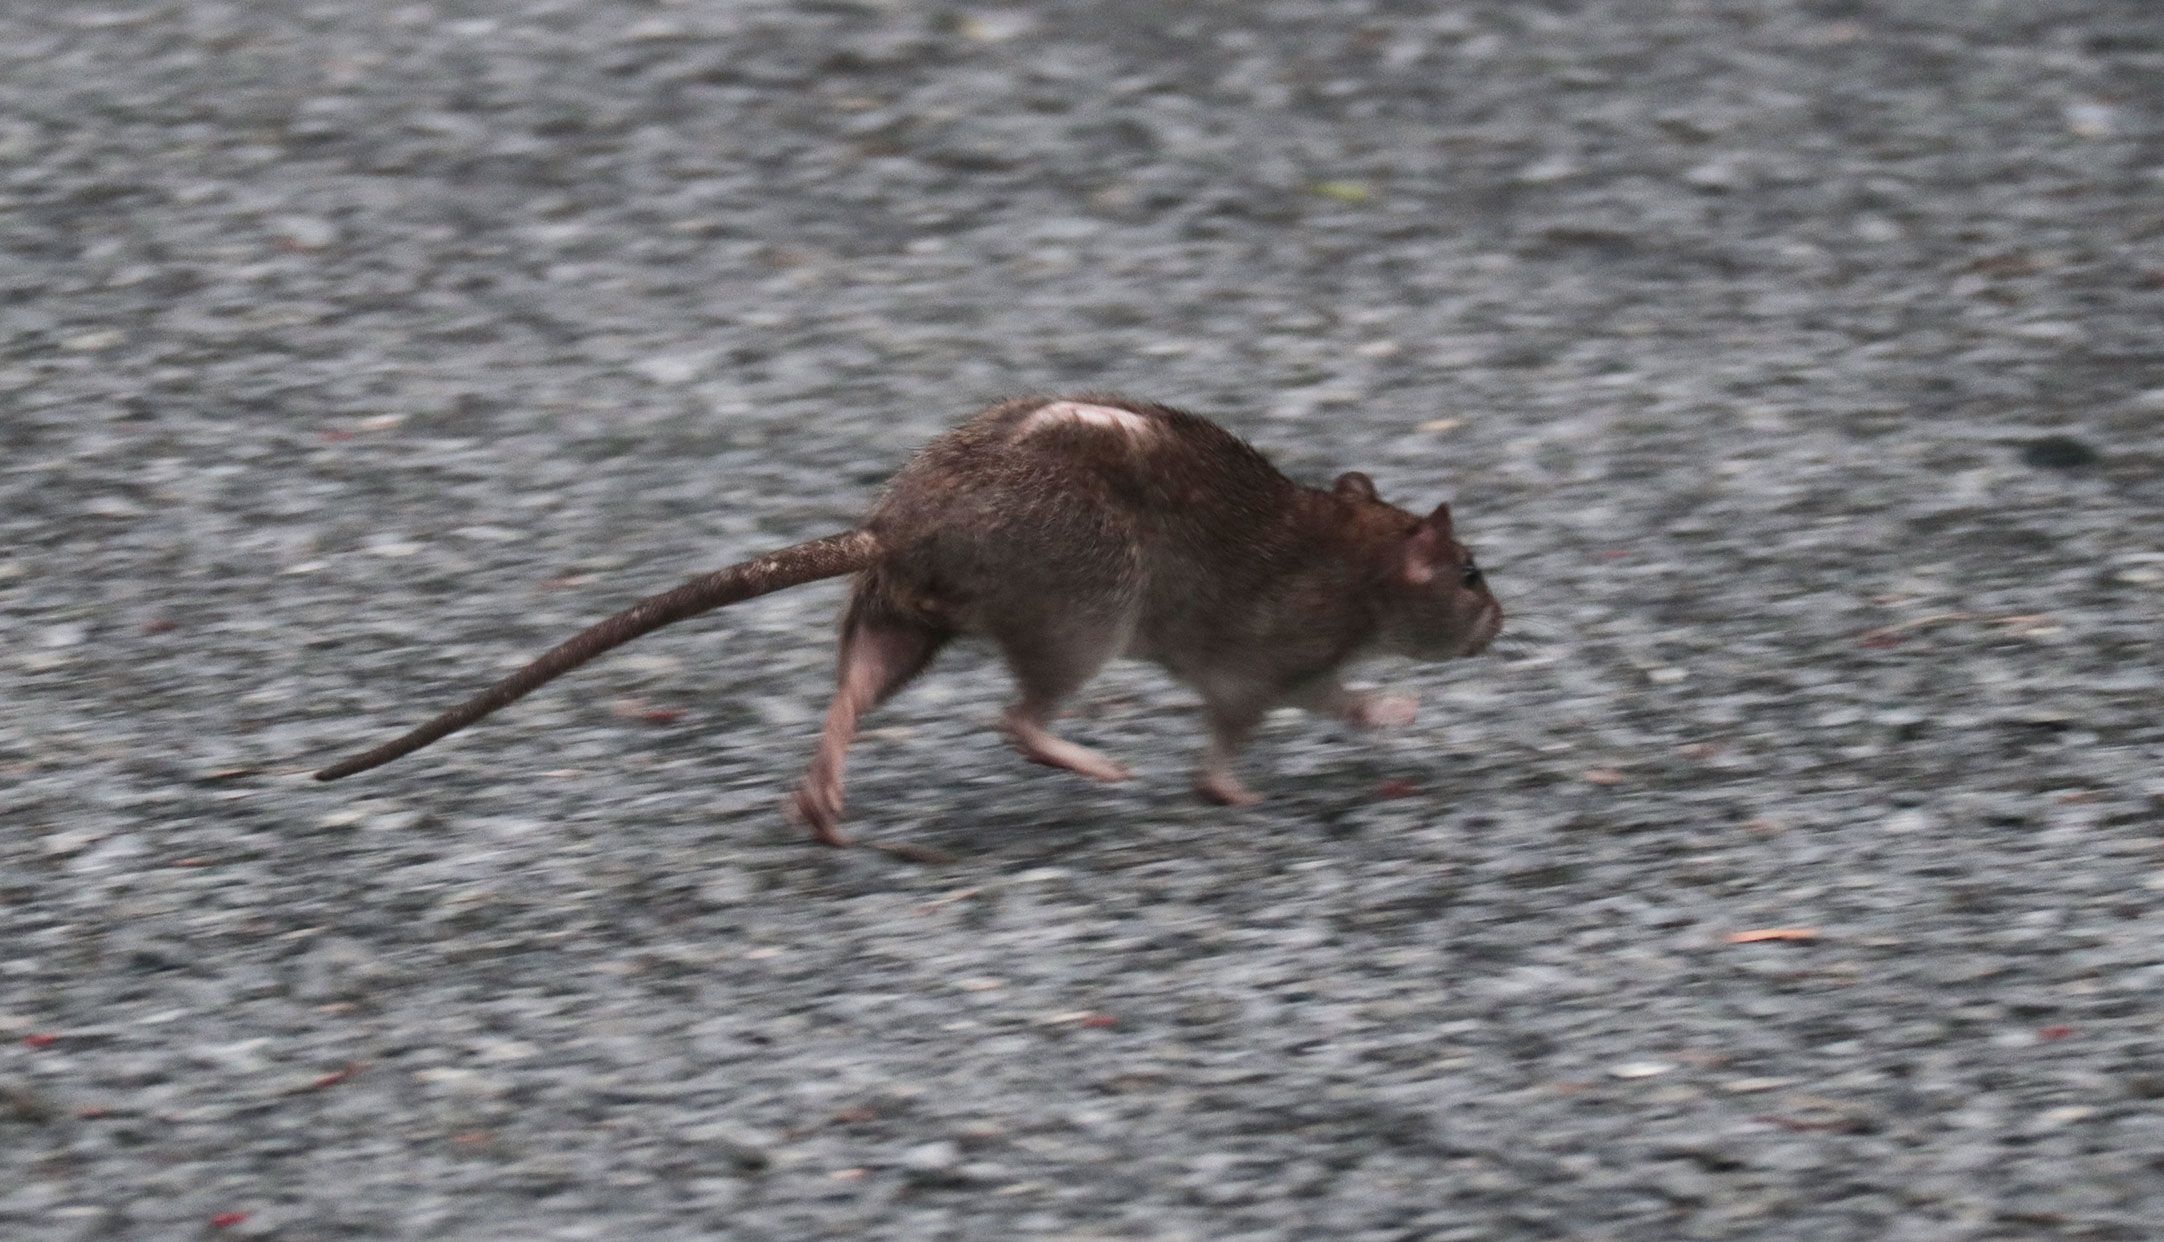 New York City Rat Population Is Hard to Measure